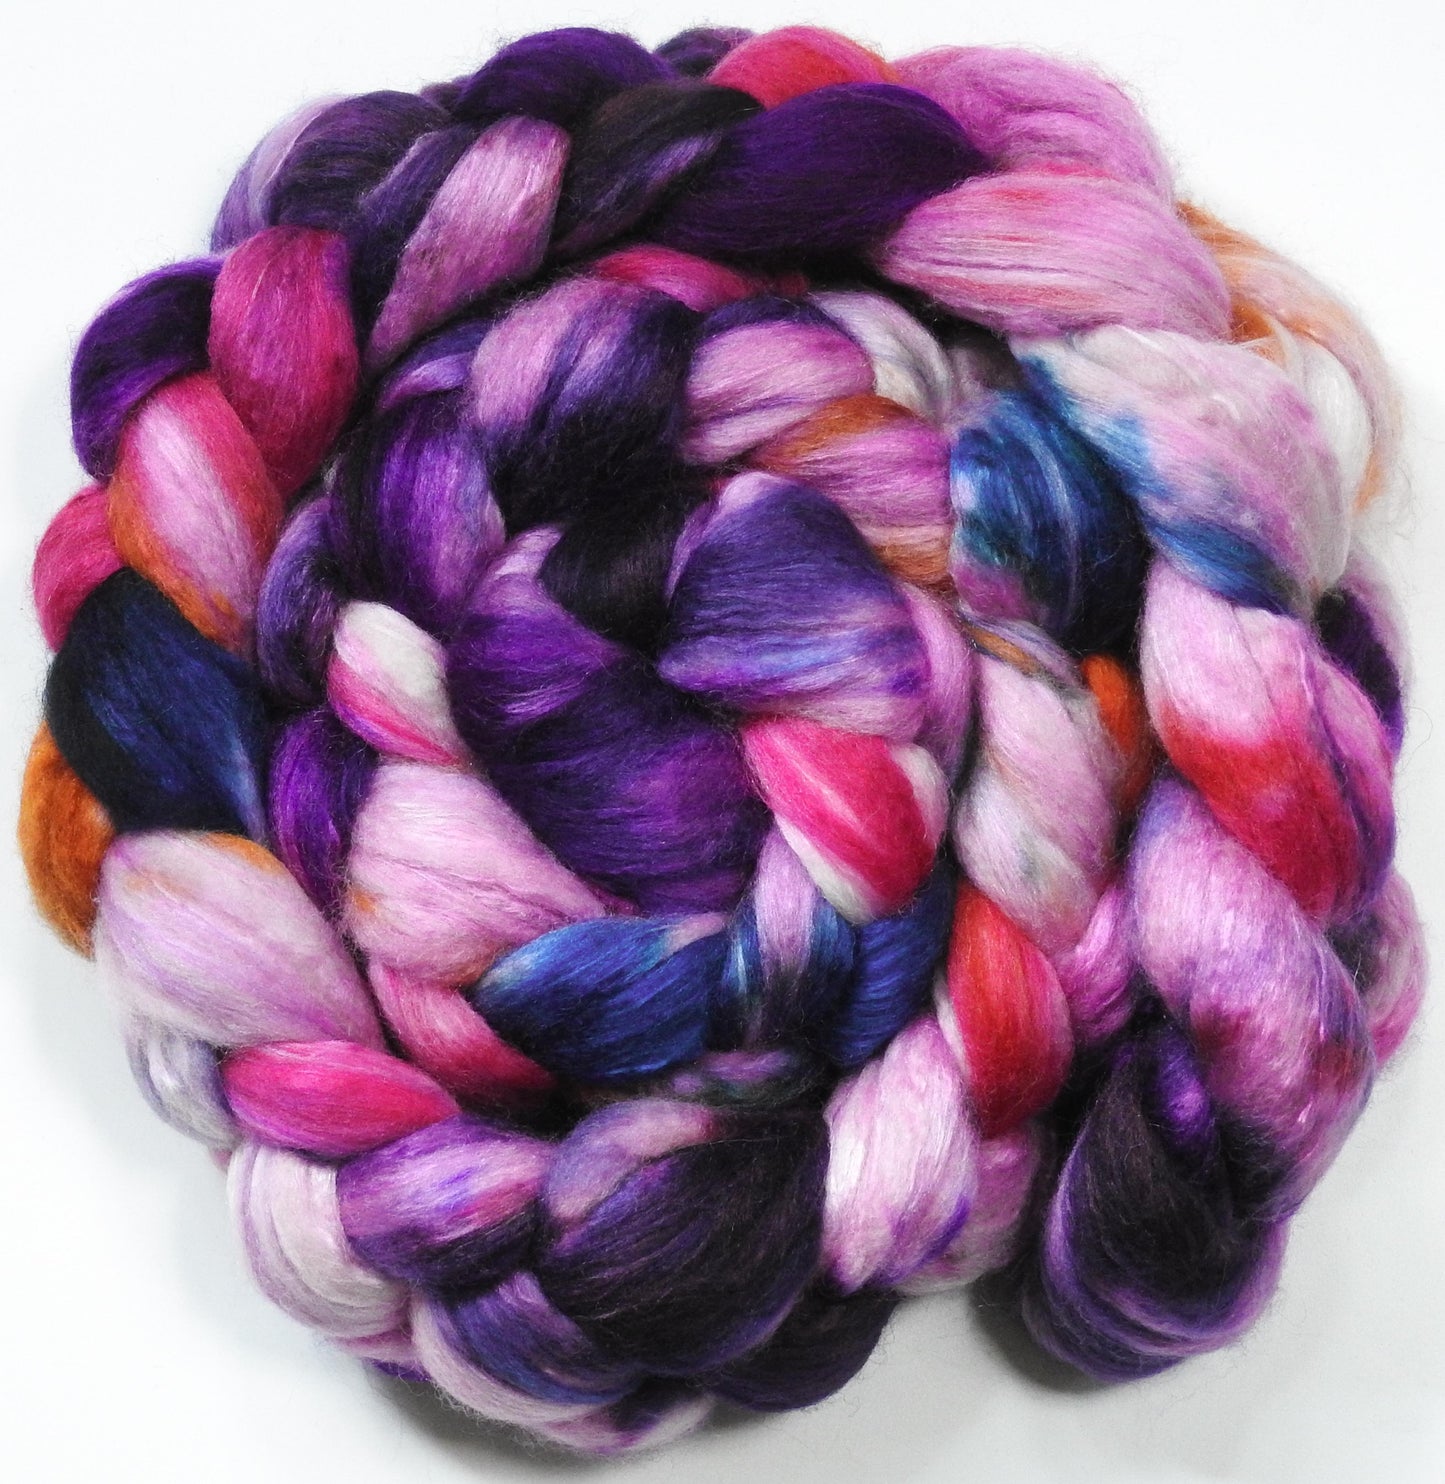 Petunia Redux - Batt in a Braid #54- Bleached YAK/Polwarth / Mulberry Silk (40/40/20)